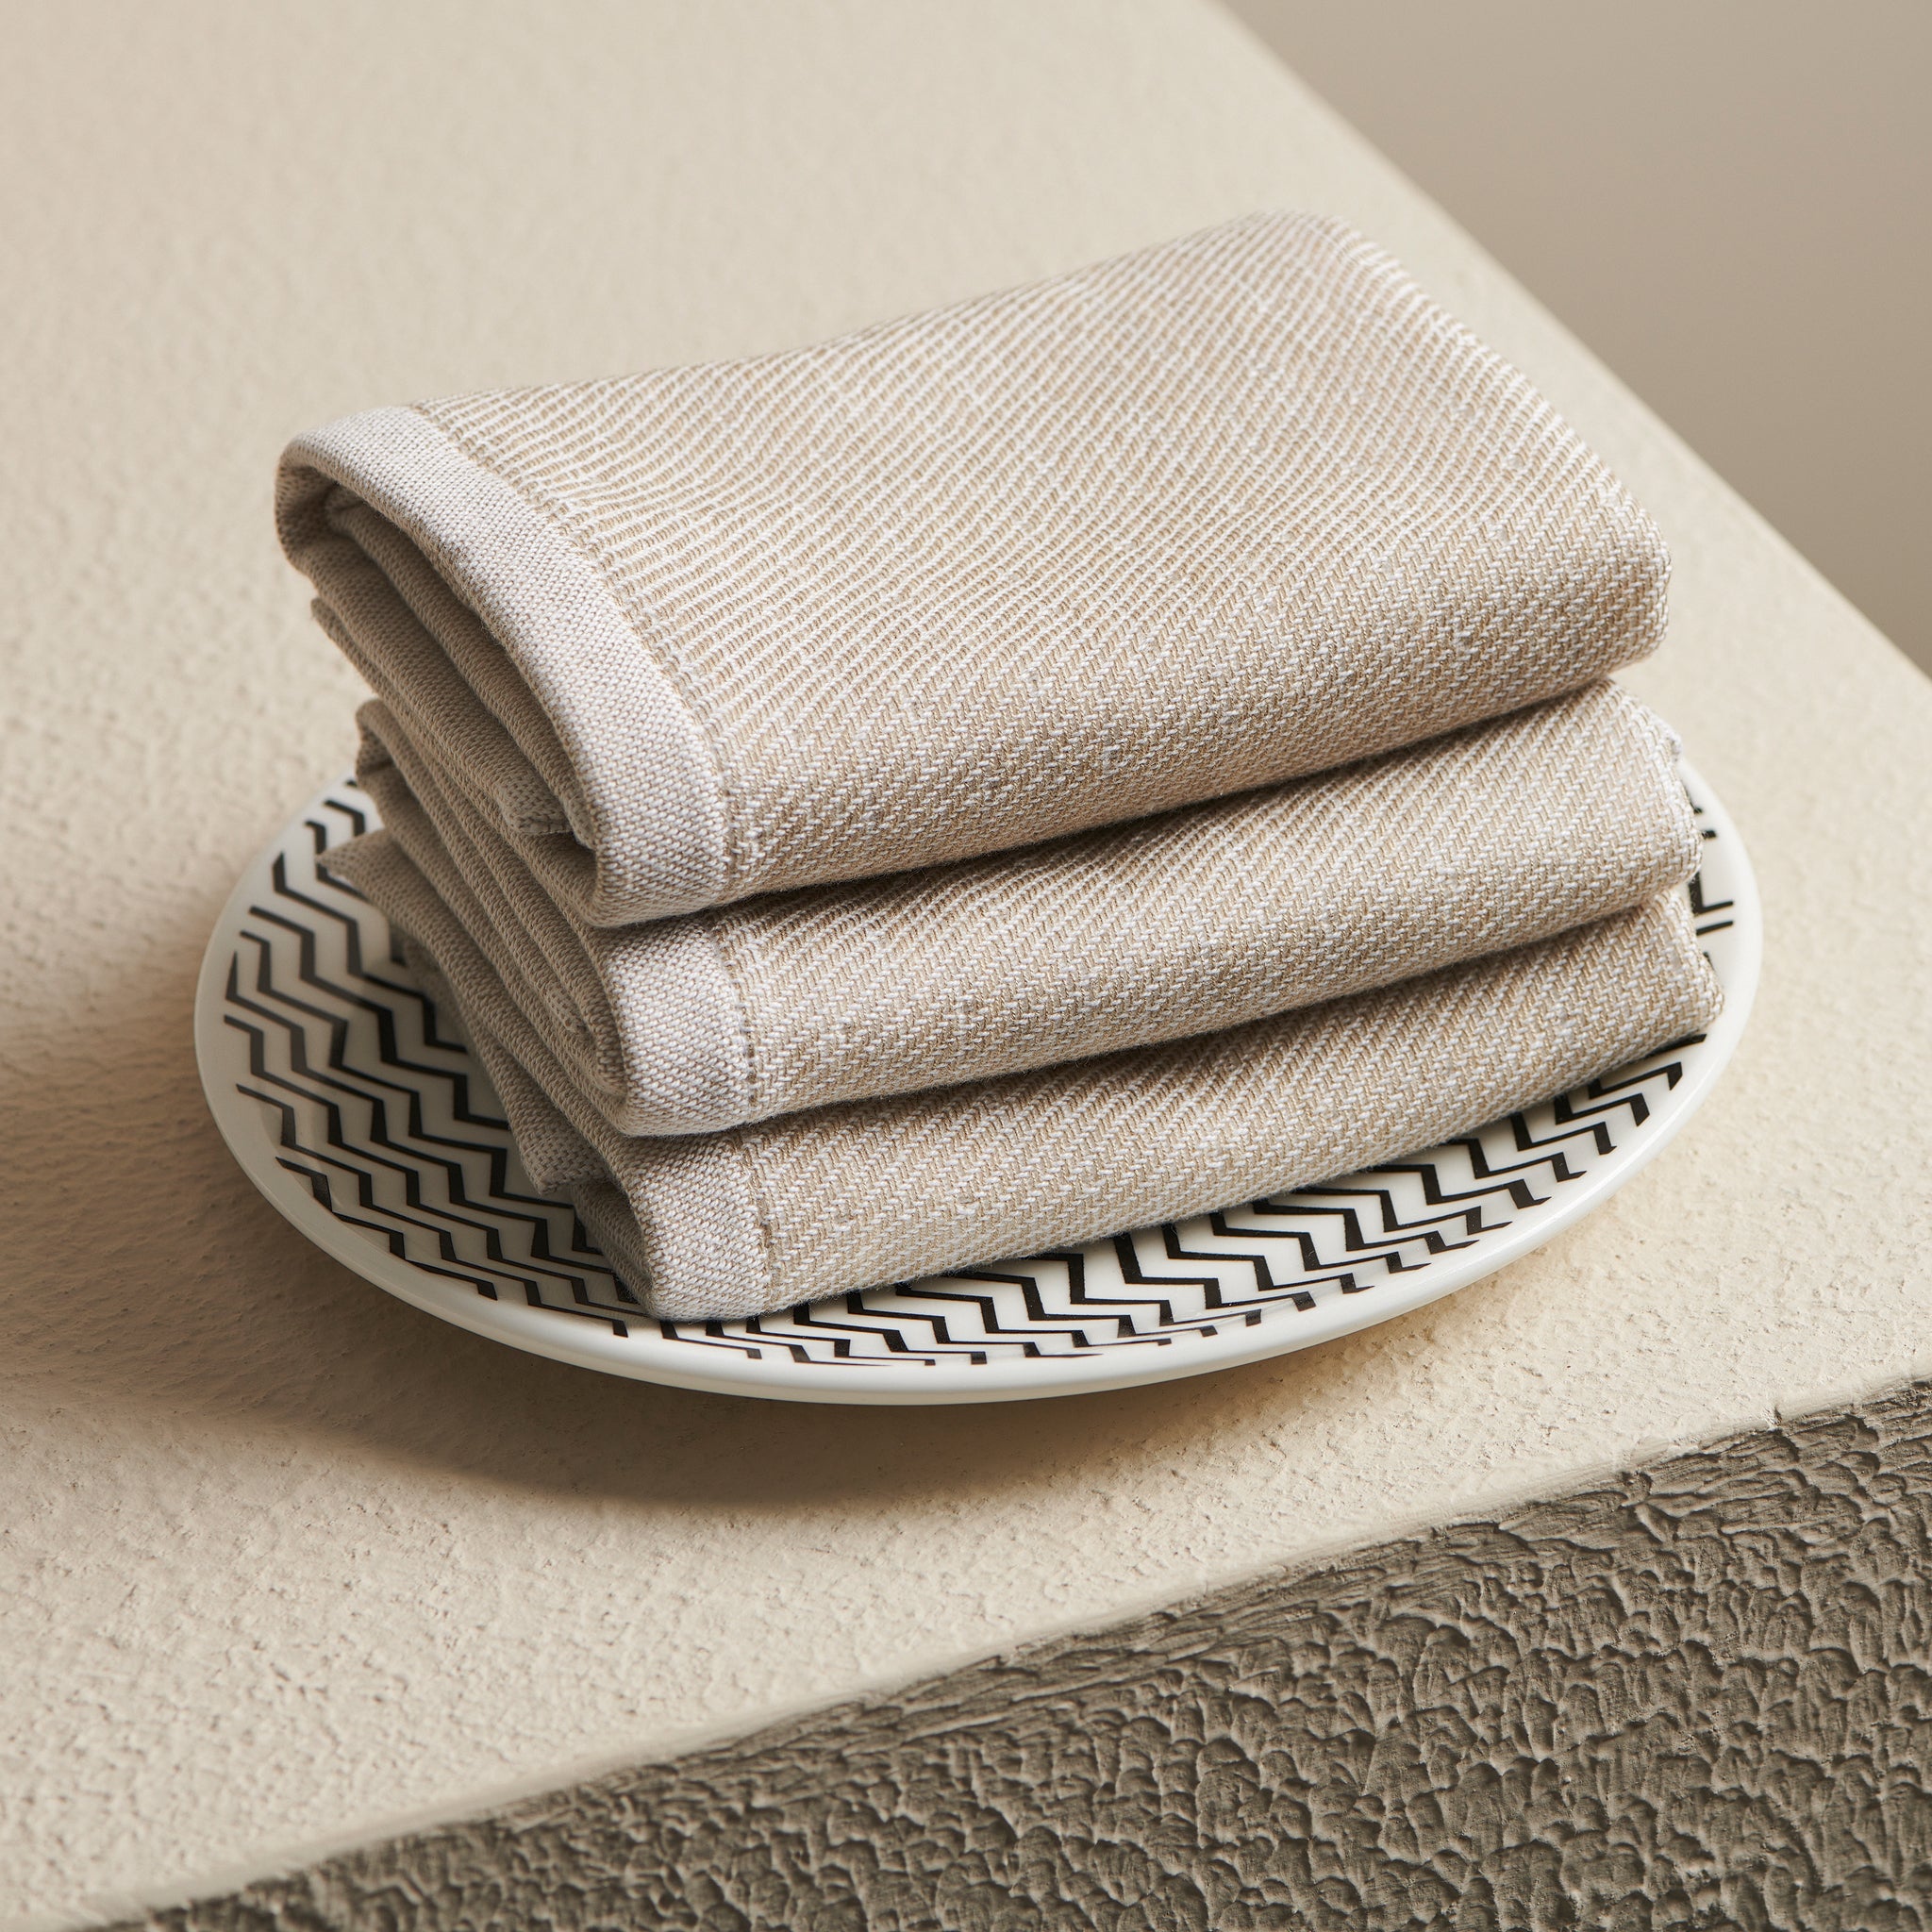 Fern Print | Cotton Bamboo | Hammam Terry | Towel